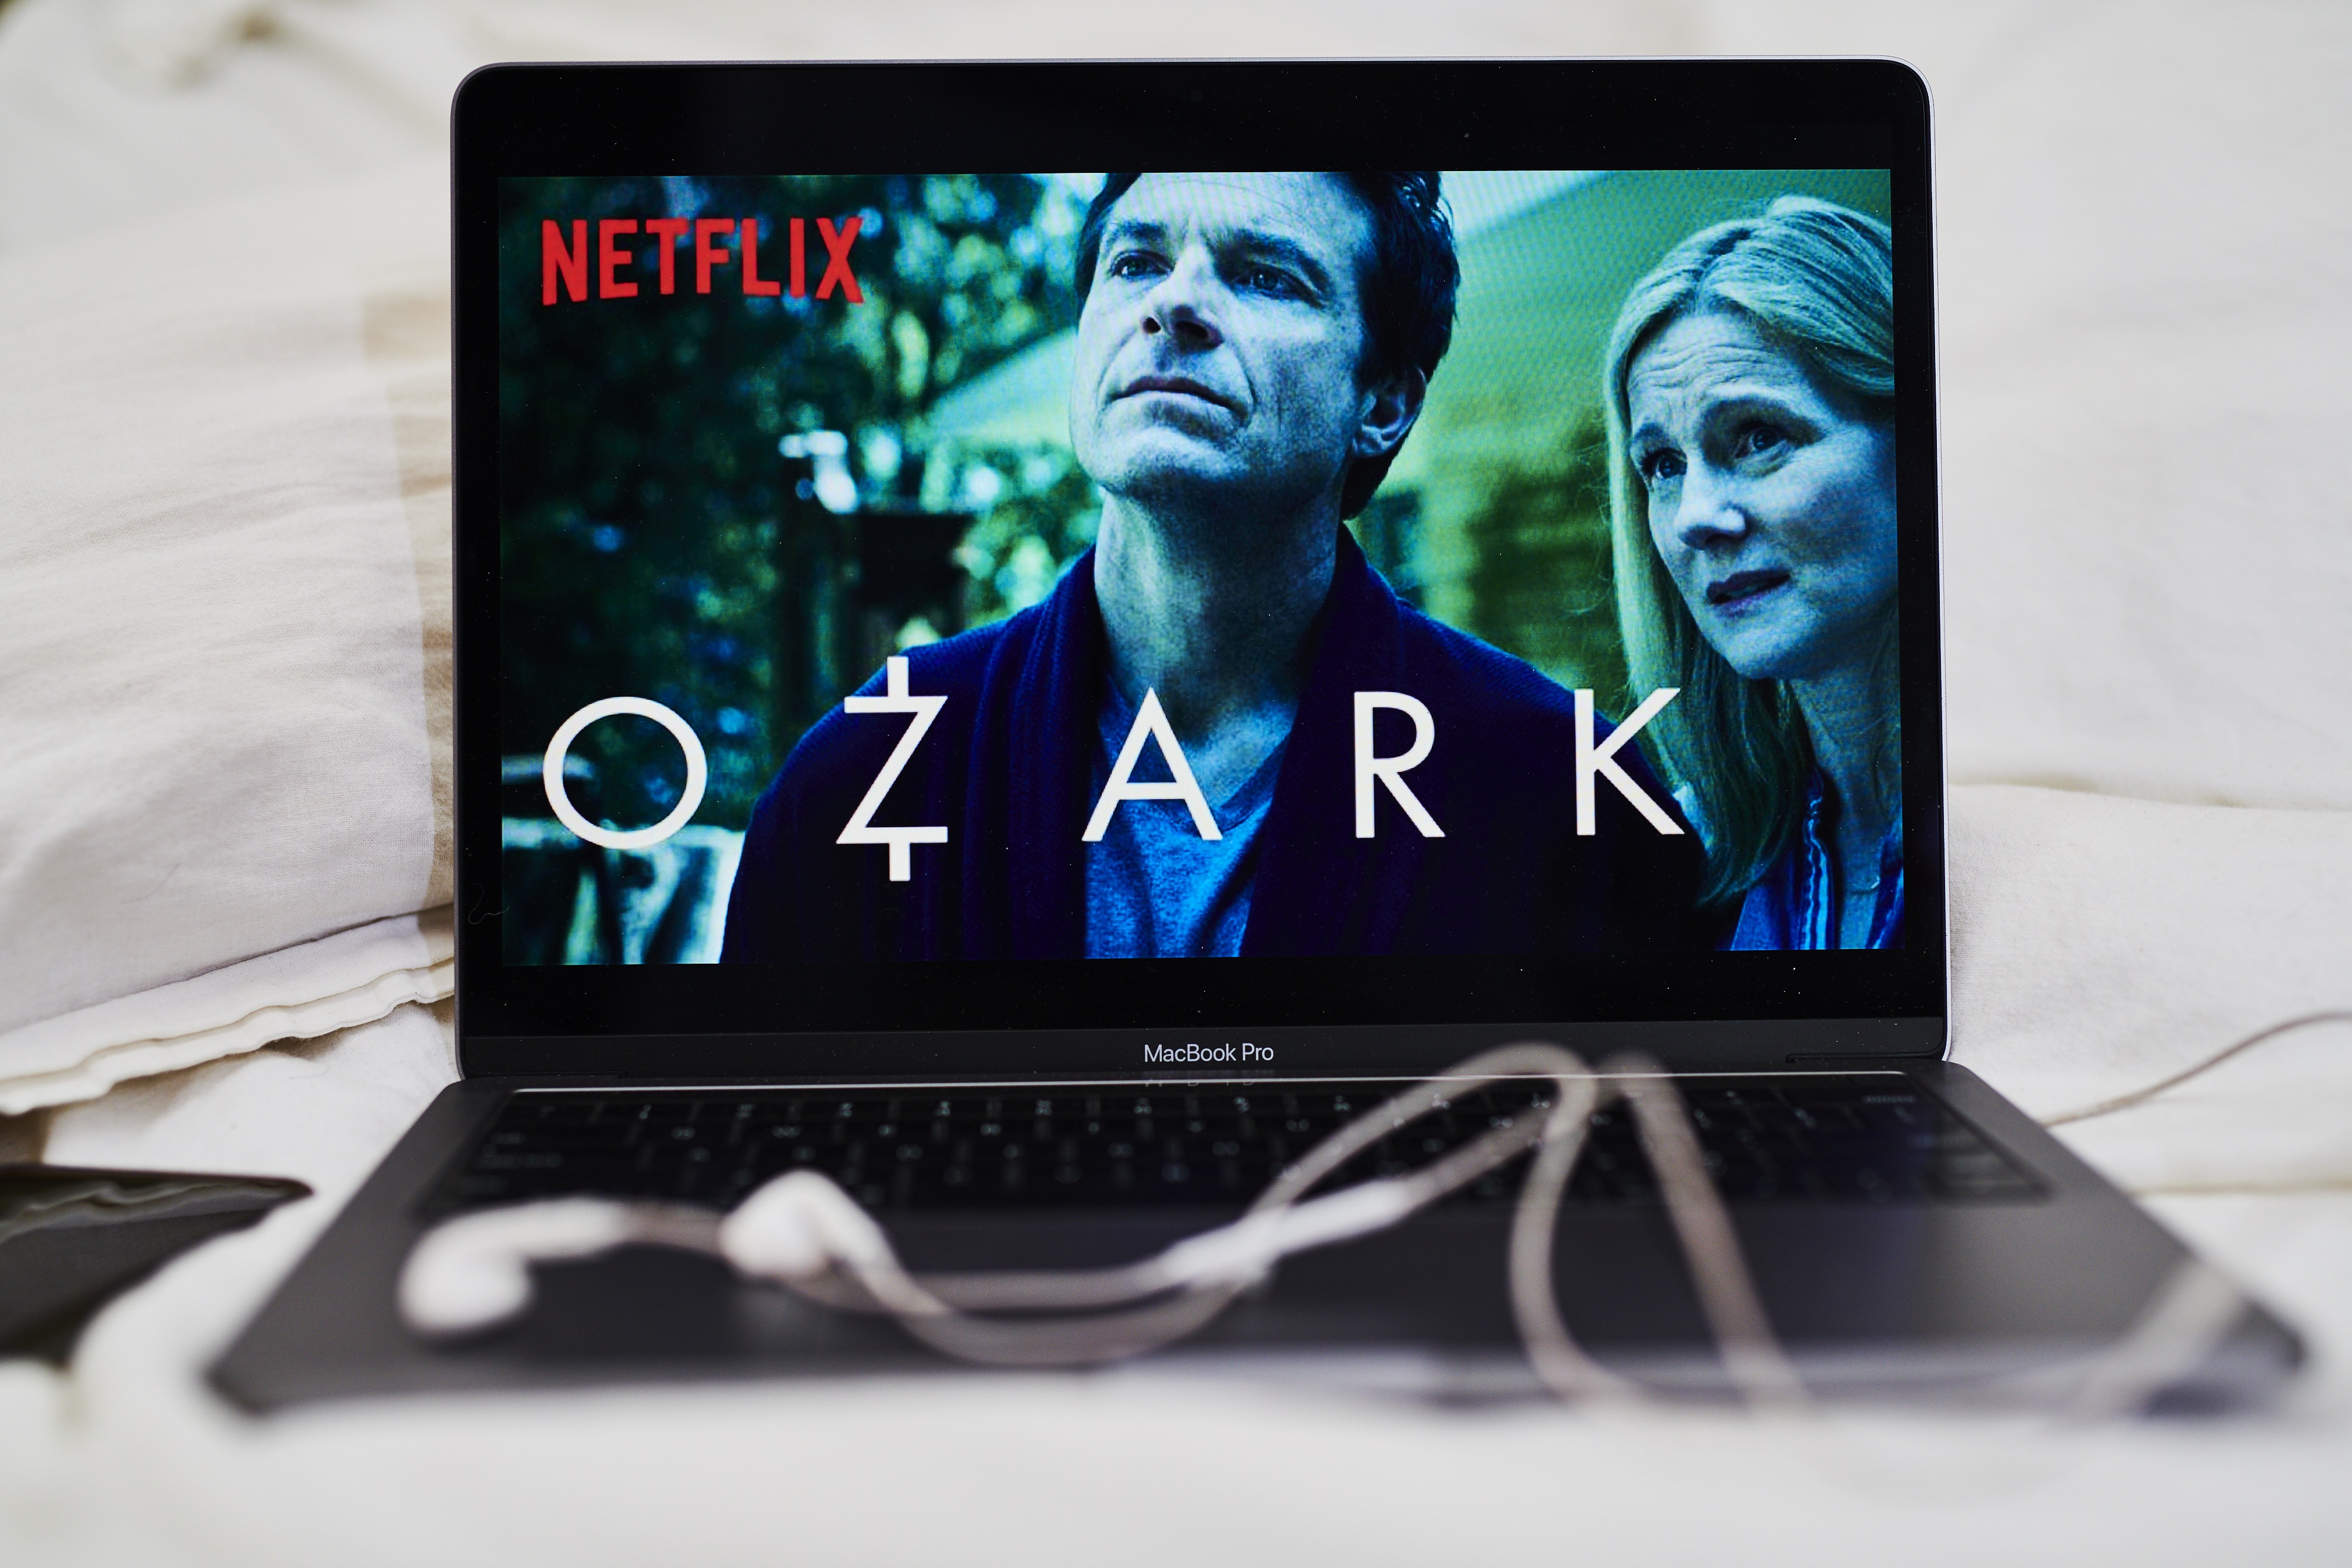 Nielsen: Netflix’s ‘Ozark’ Clocked 4.1 Billion Viewing Minutes After Season 4 Release